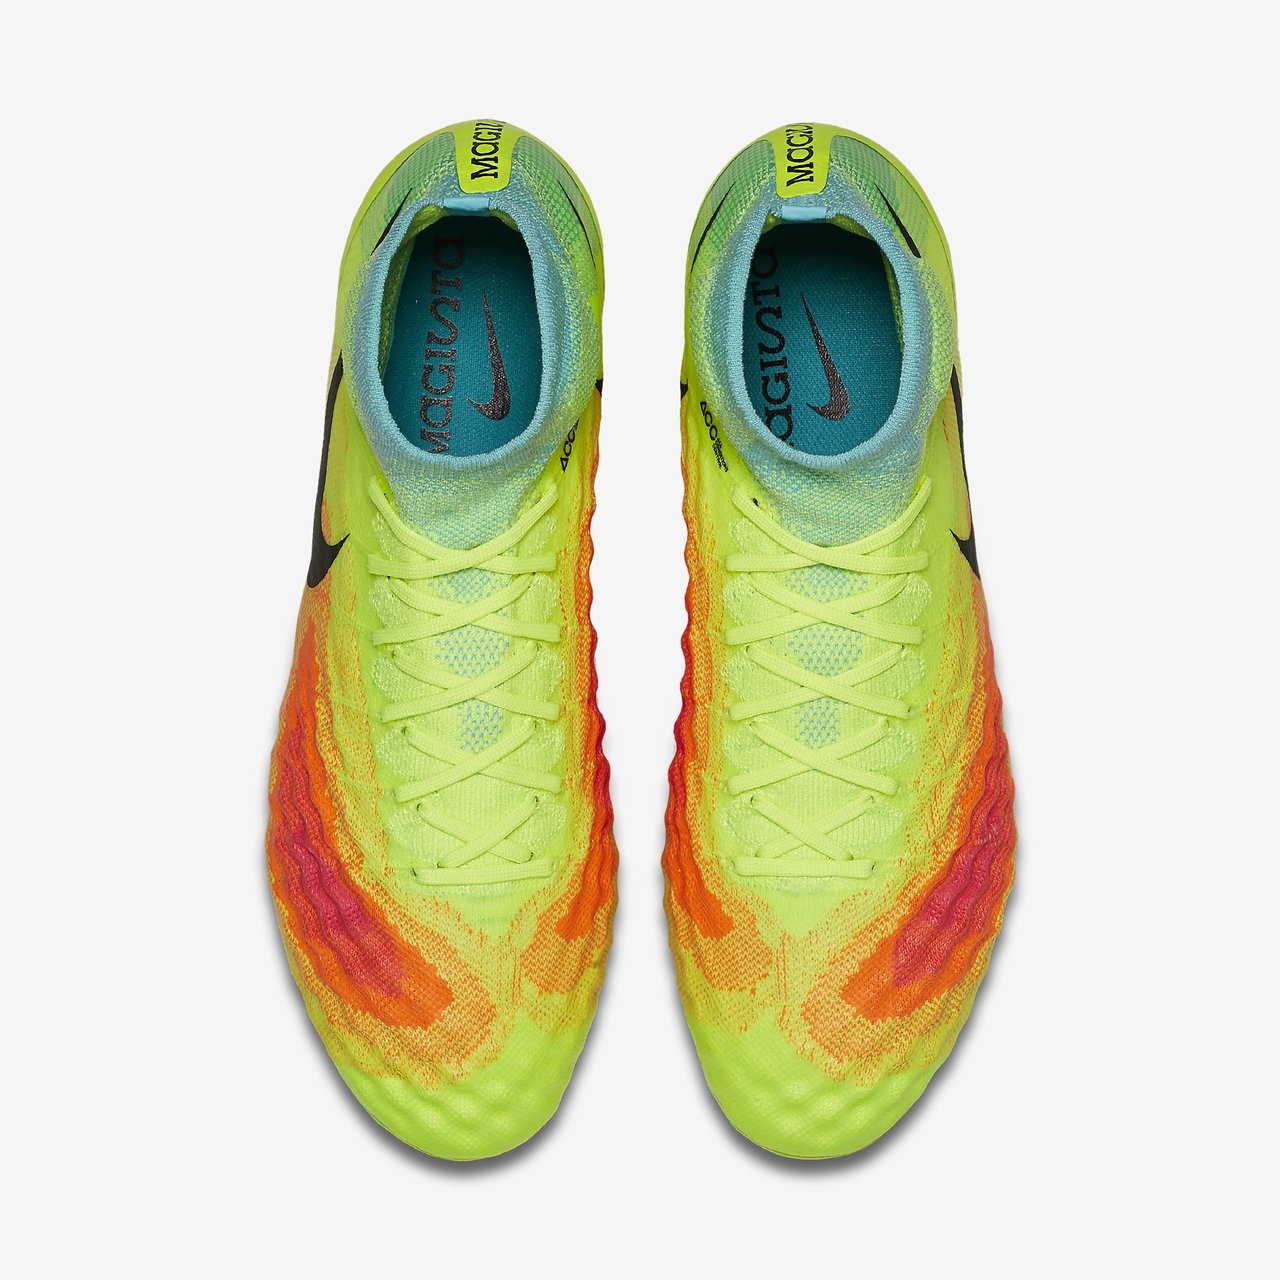 Nike Magista Obra II AG PRO Artificial Turf Soccer Cleat